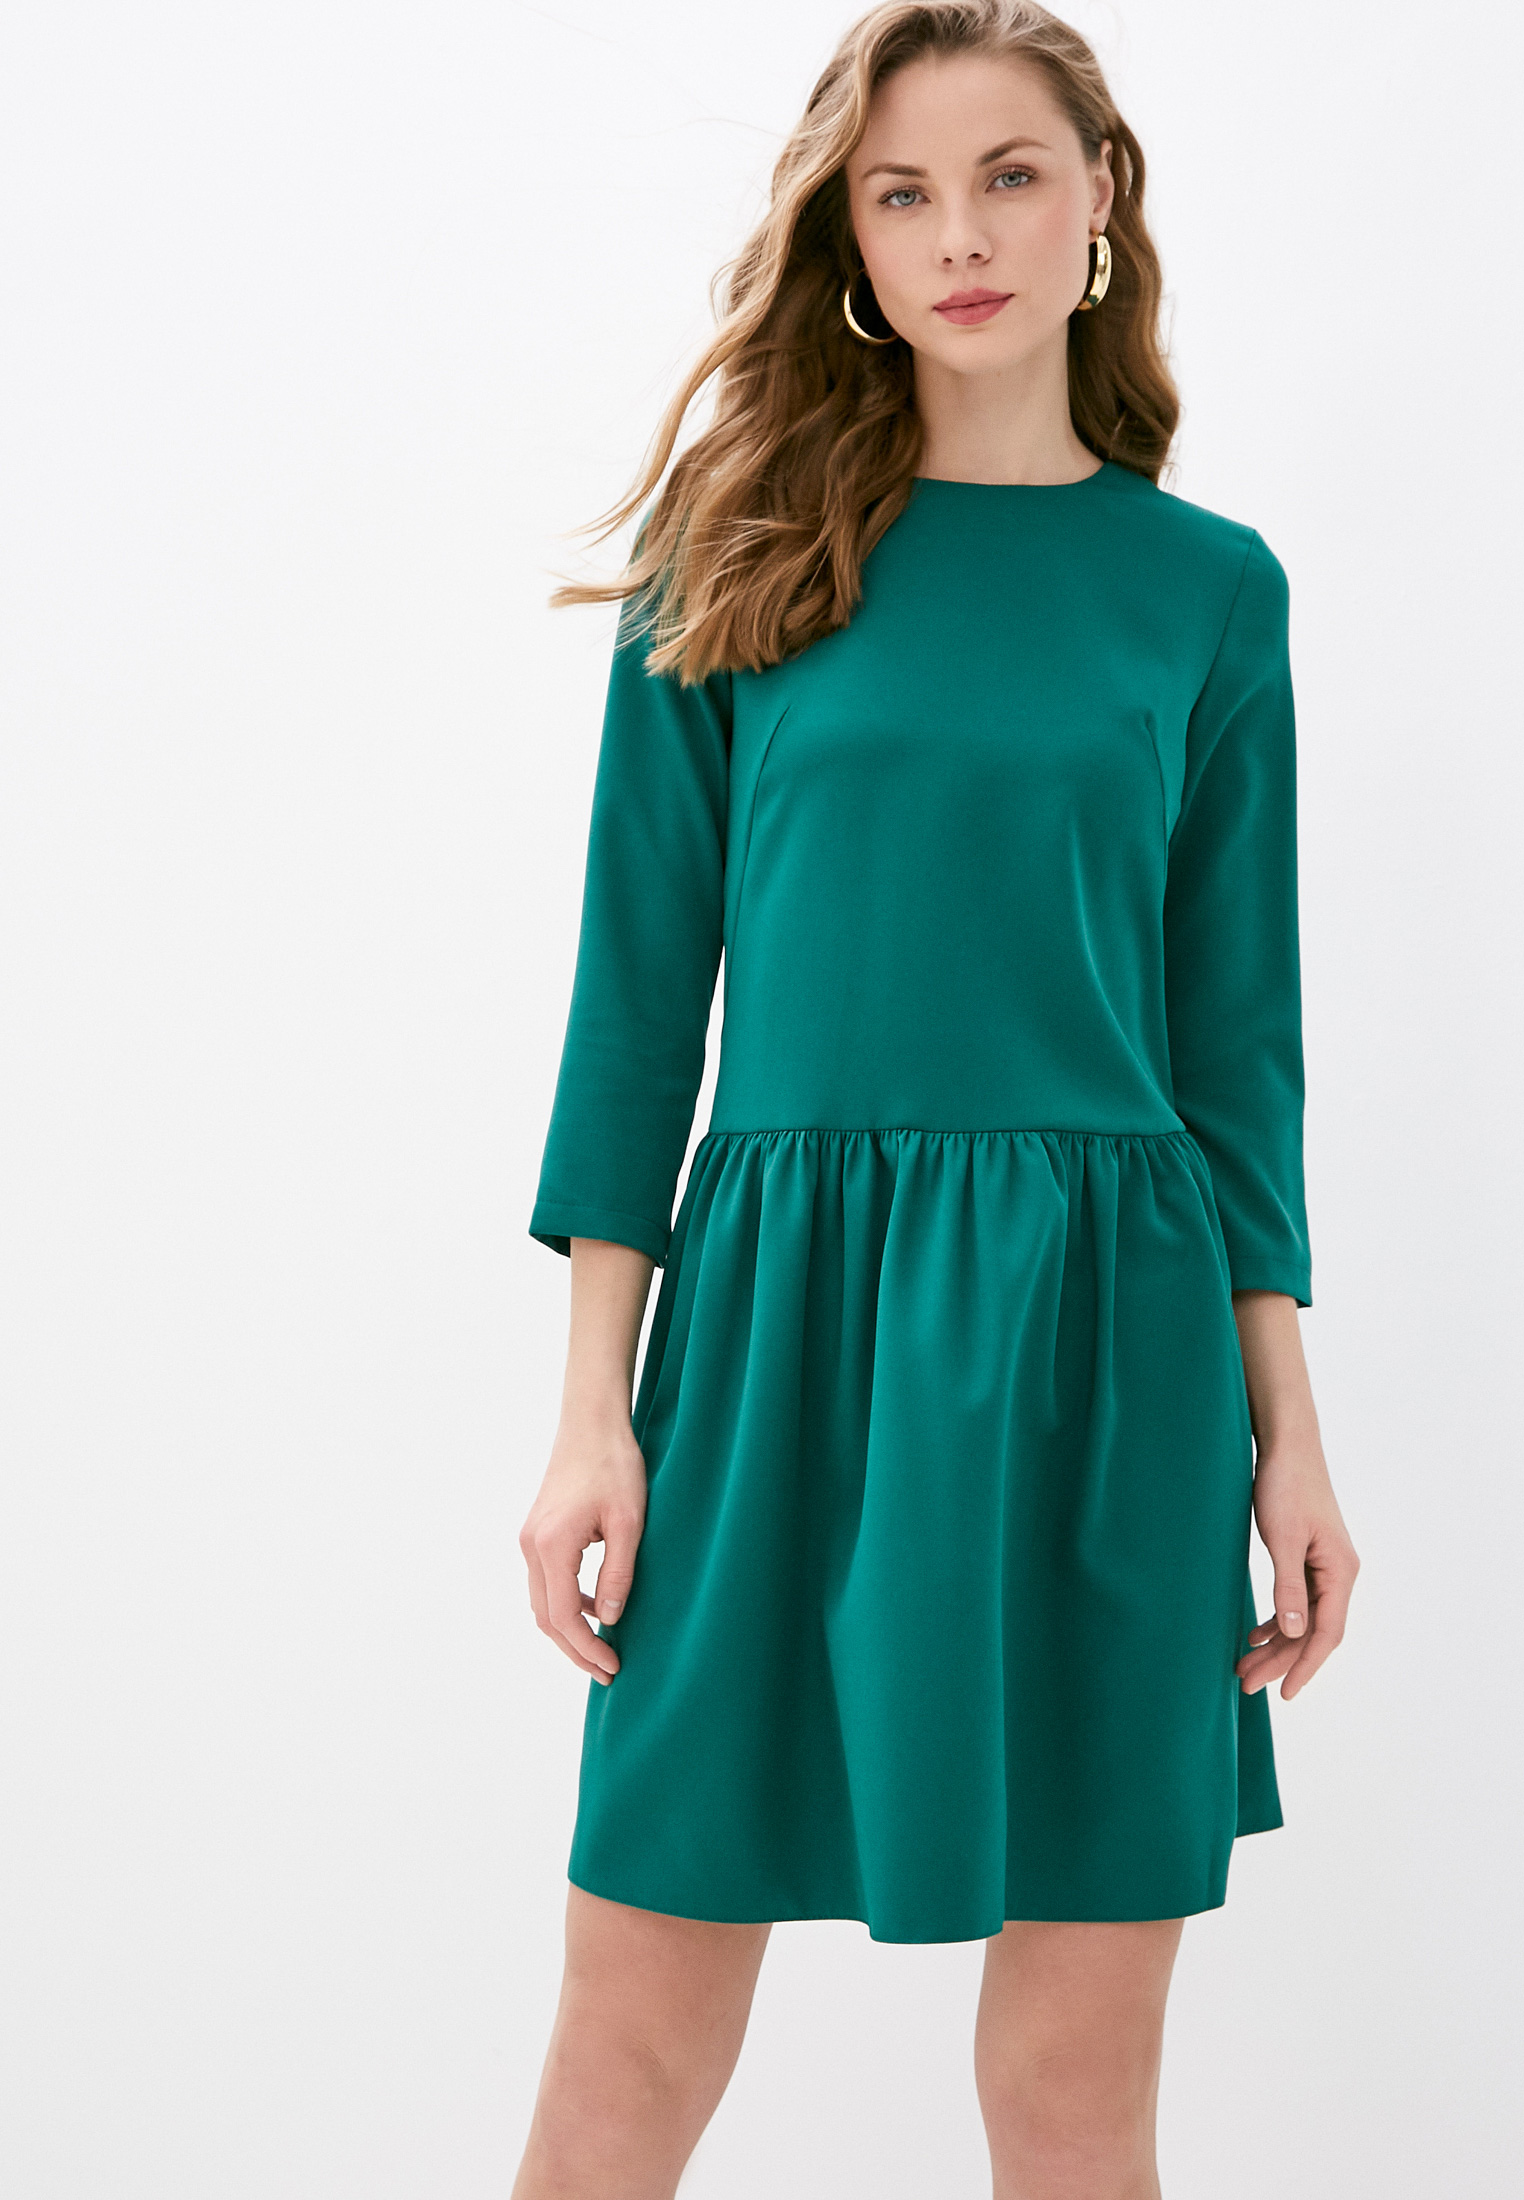 Платье A-A Awesome Apparel by Ksenia Avakyan, цвет: зеленый, MP002XW04CKE — купить в интернет-магазине Lamoda